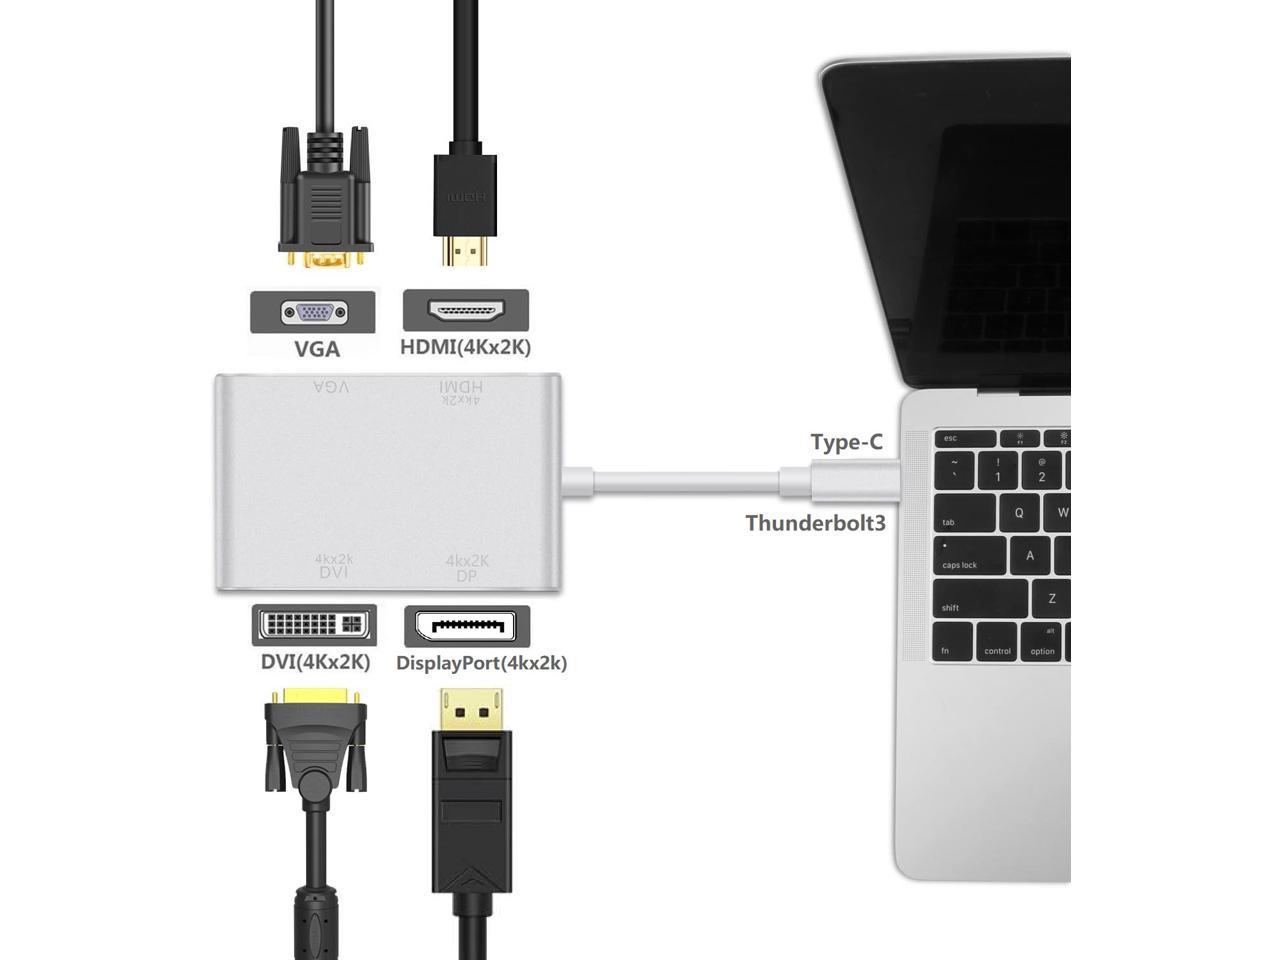 Type-C to HDMI + VGA + DVI + DP Video HUB for Dual Display, 4 in 1 USB